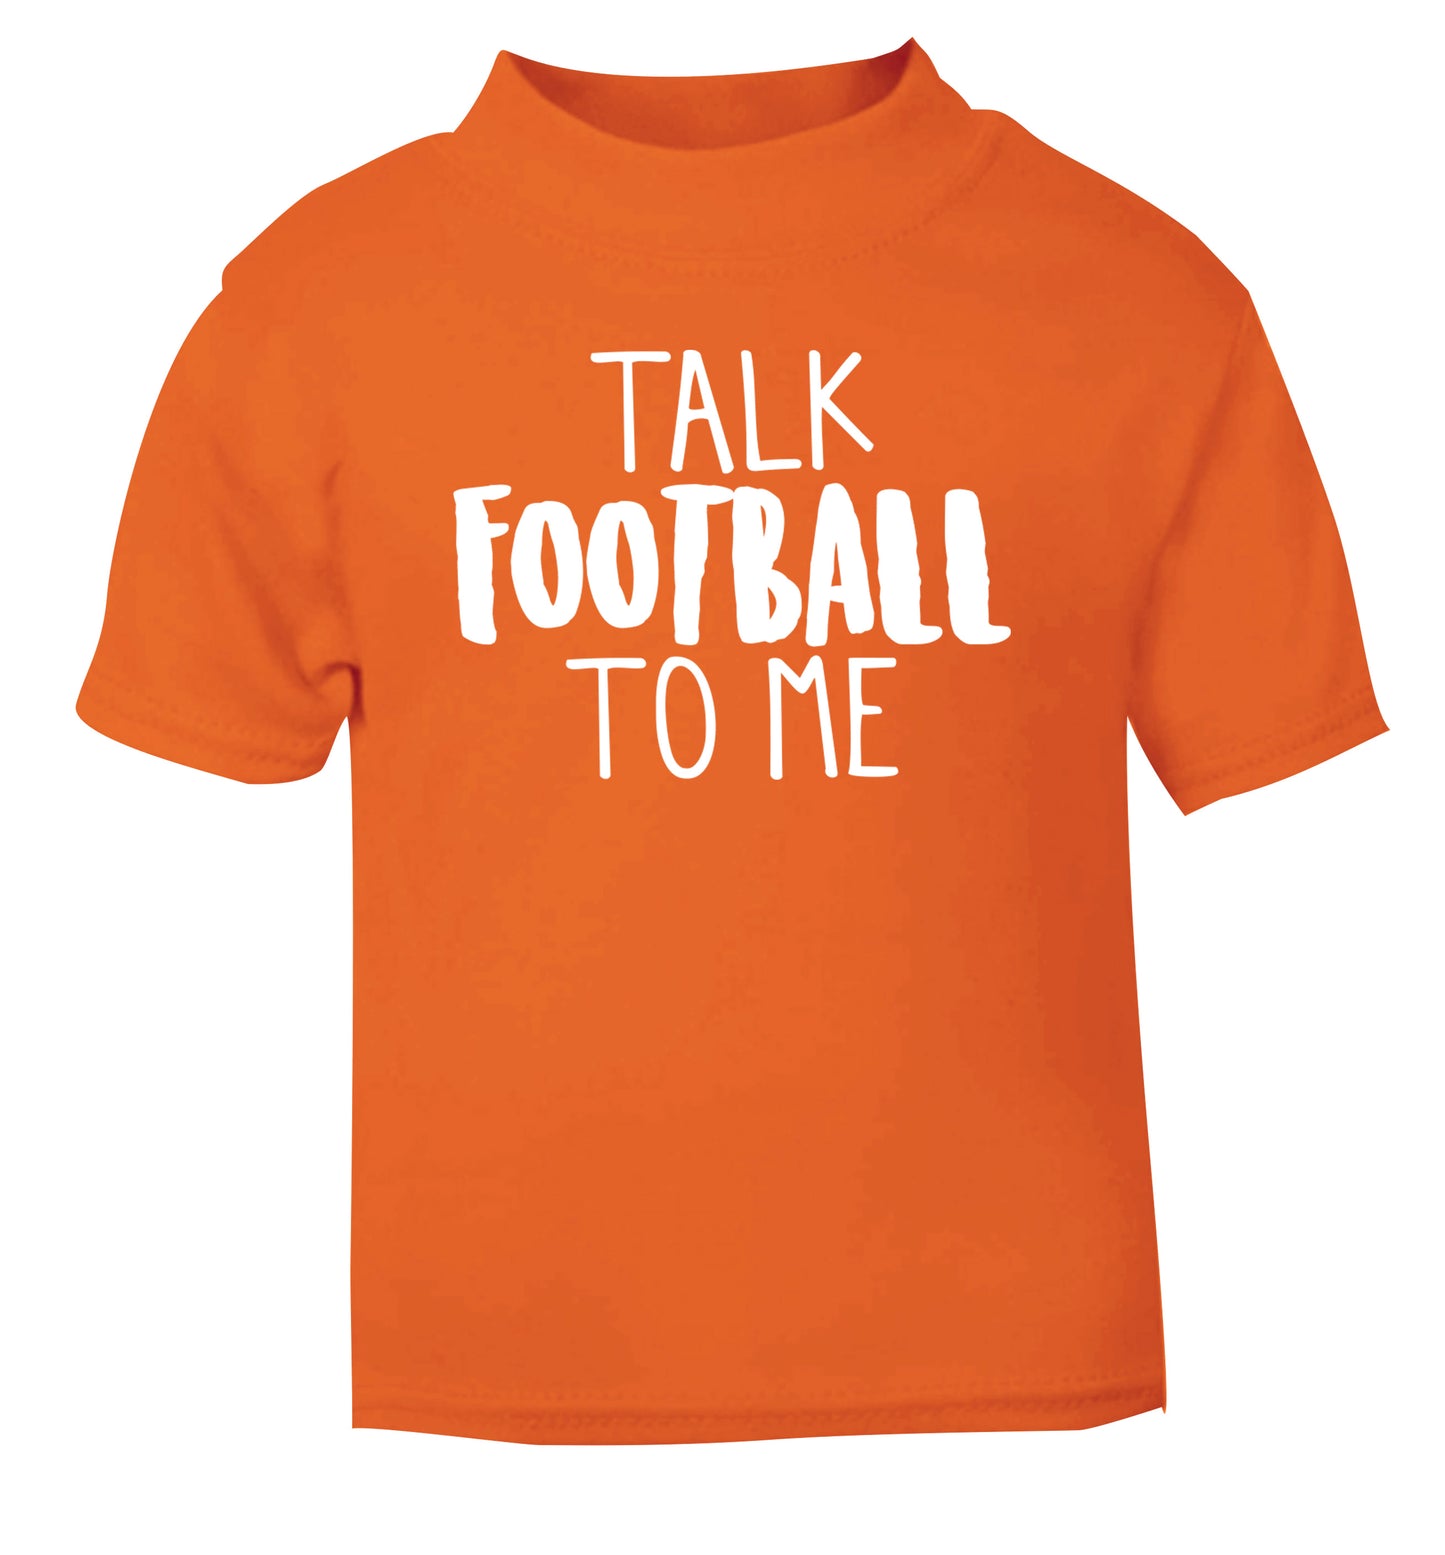 Talk football to me orange Baby Toddler Tshirt 2 Years